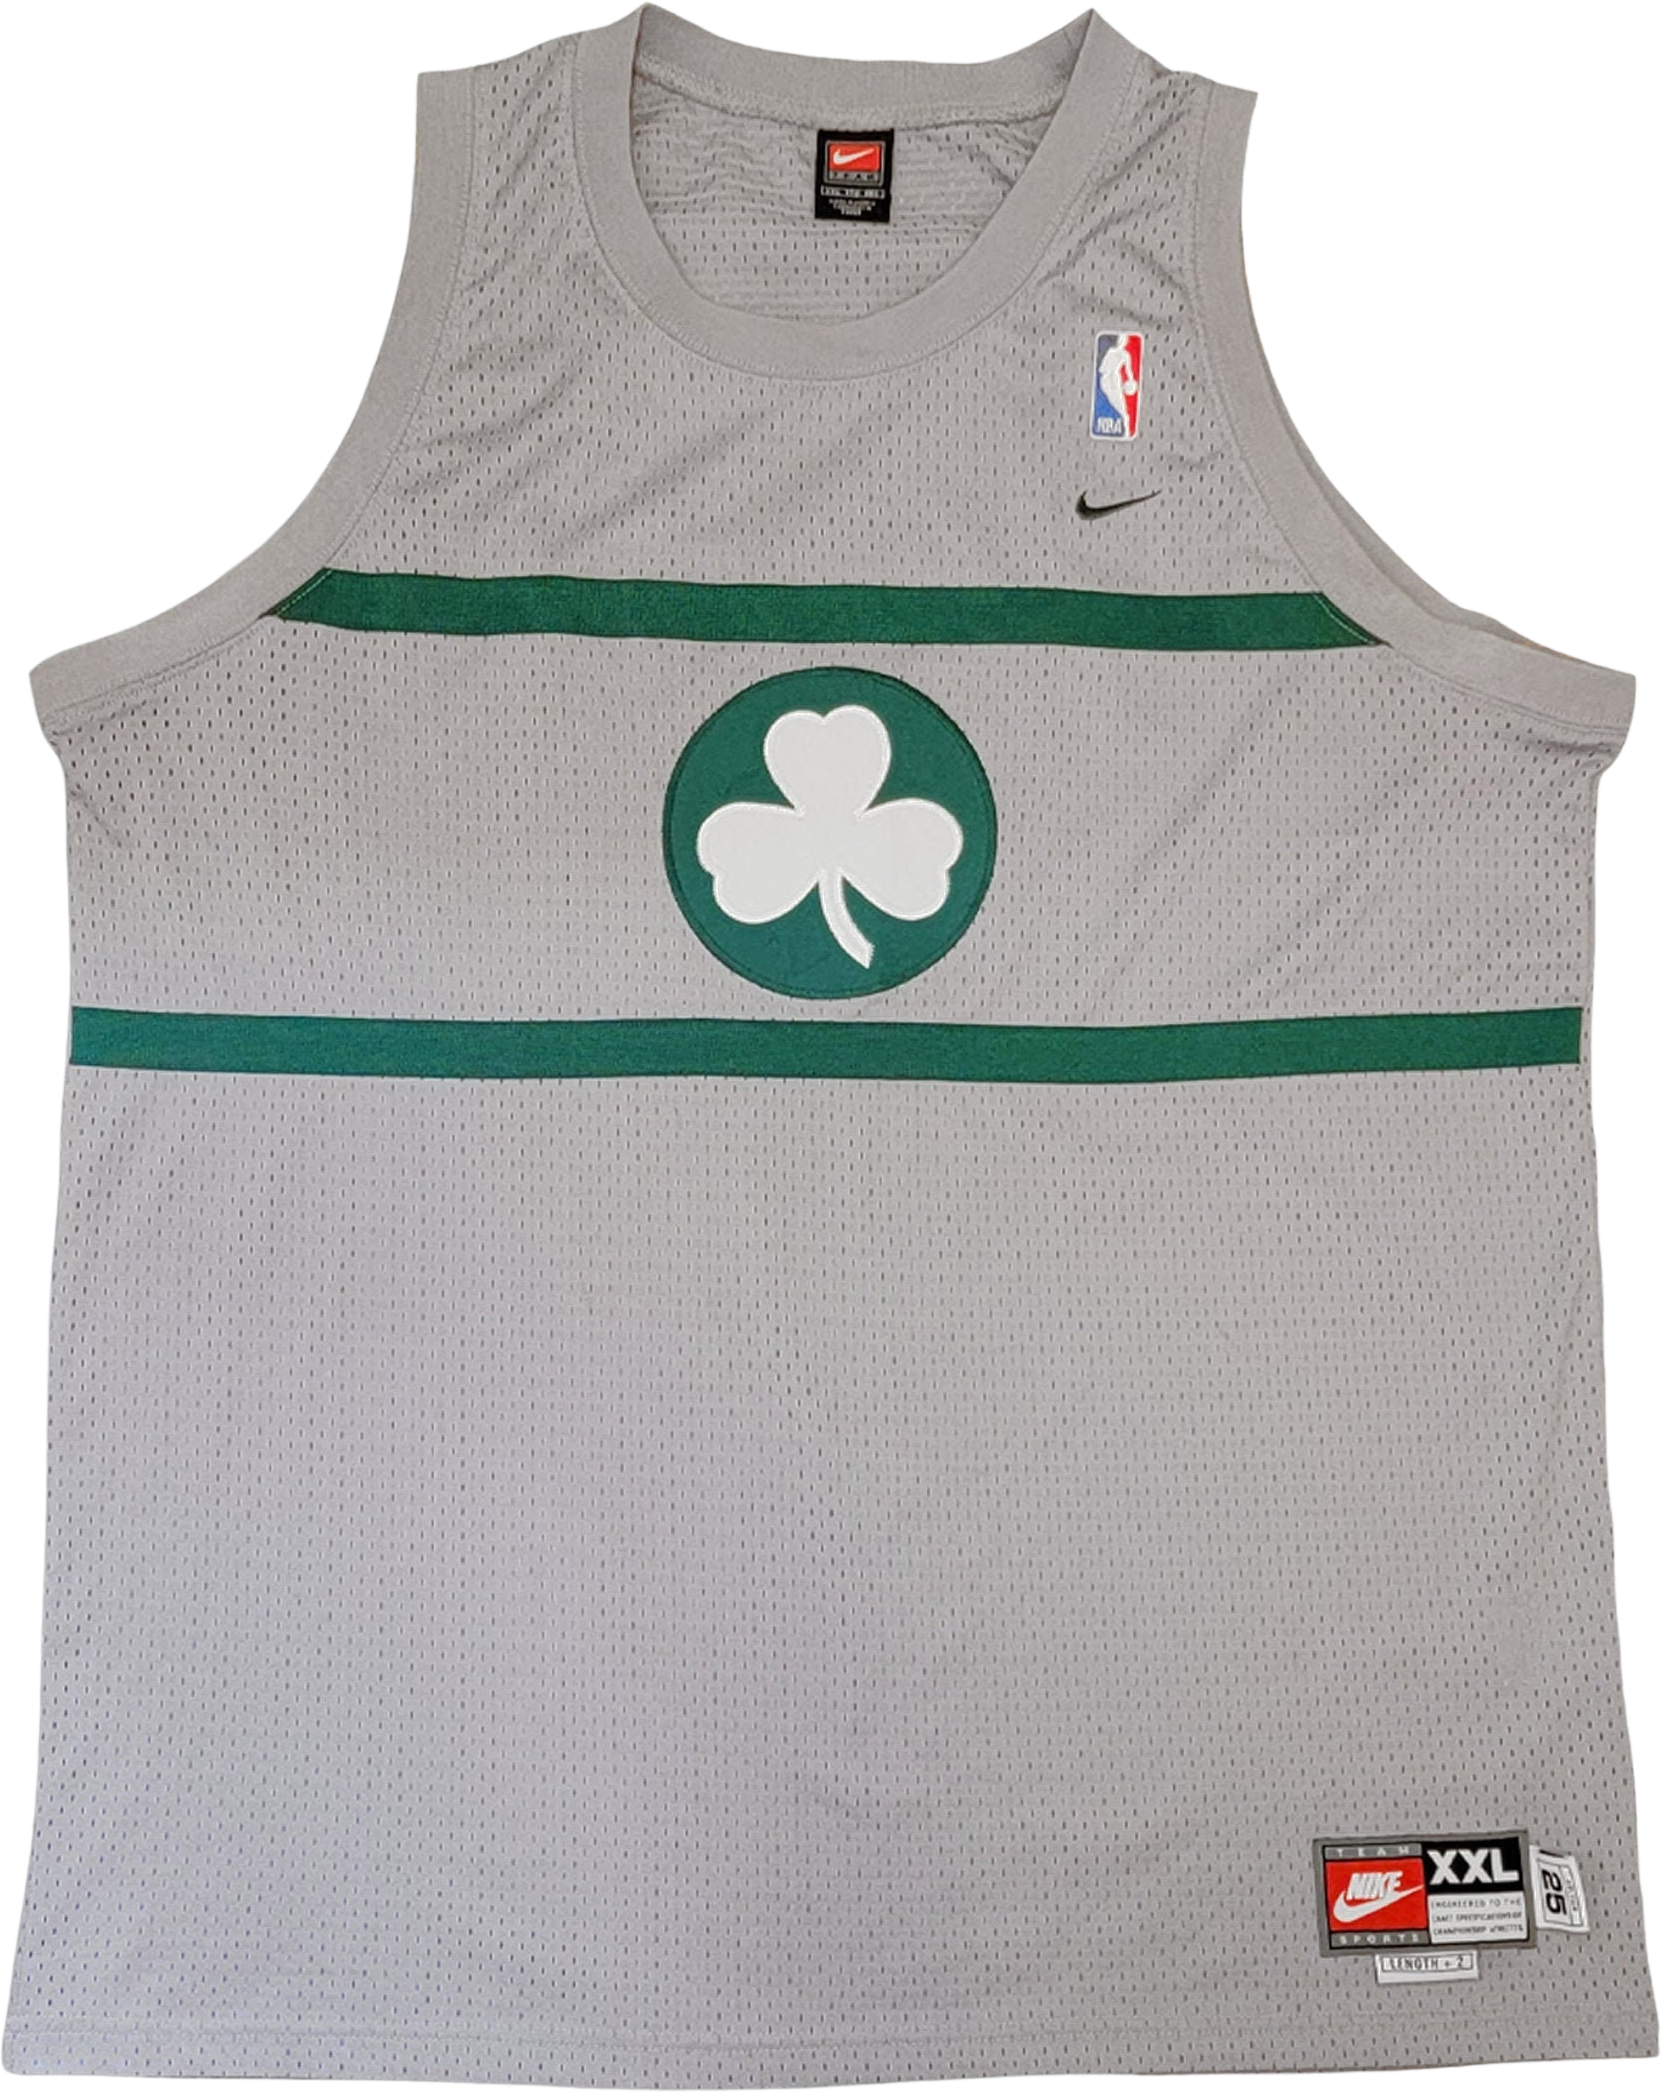 Joint Custody Vintage Nike Paul Pierce “Boston Celtics” Basketball Jersey